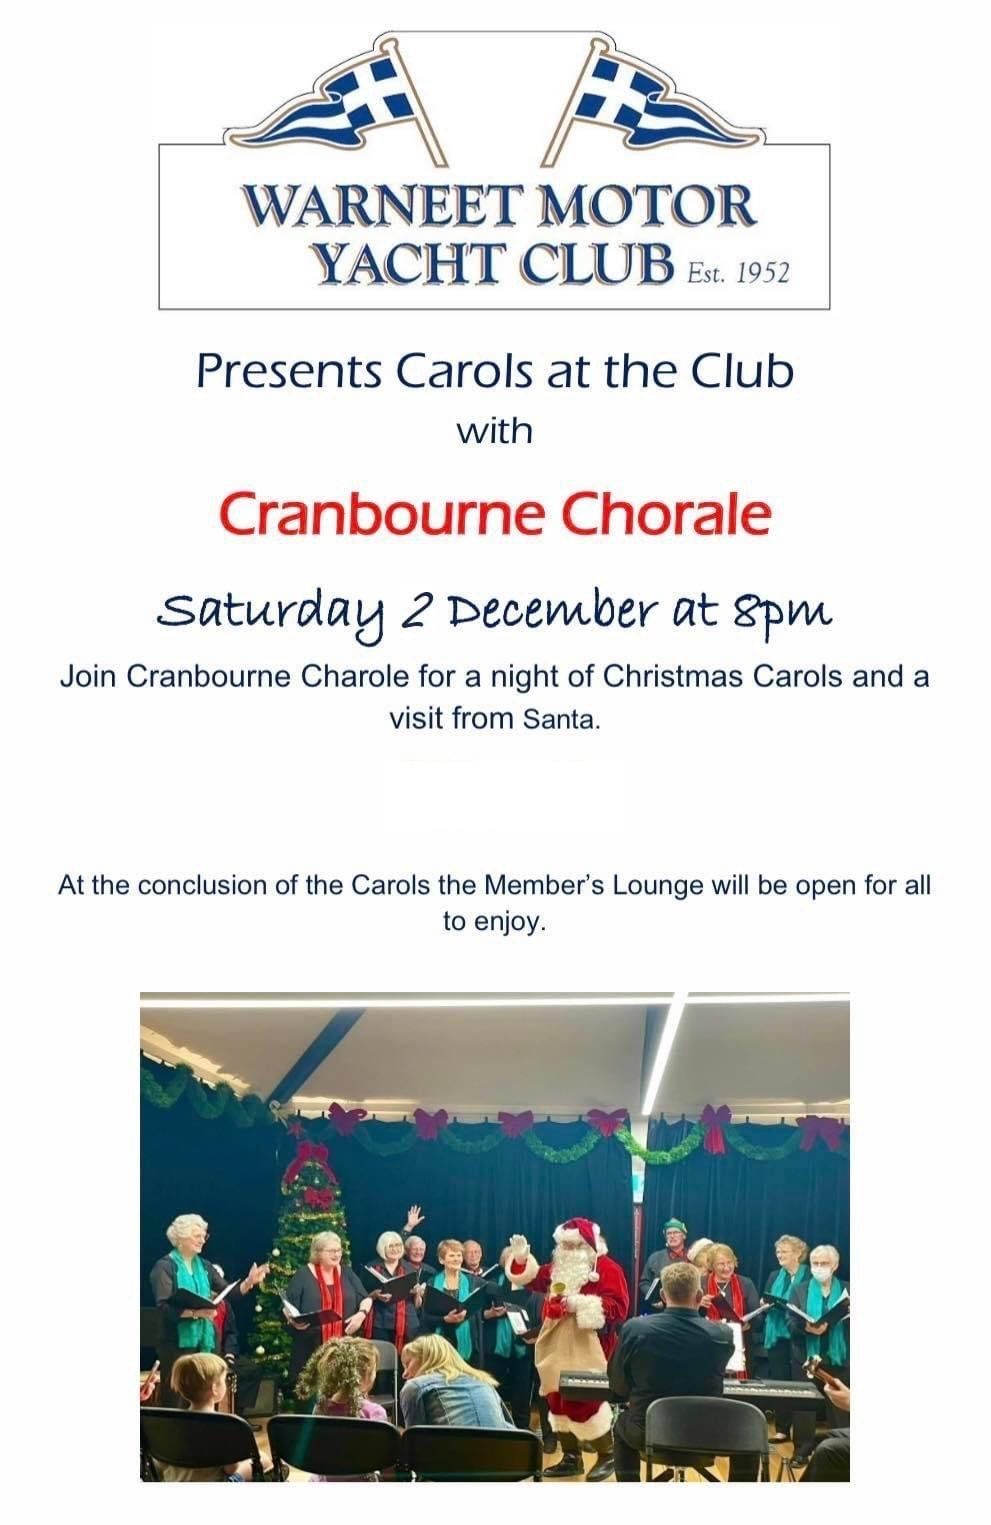 Warneet Motor Yacht Club Presents Carols At The Club with
Cranbourne Chorale